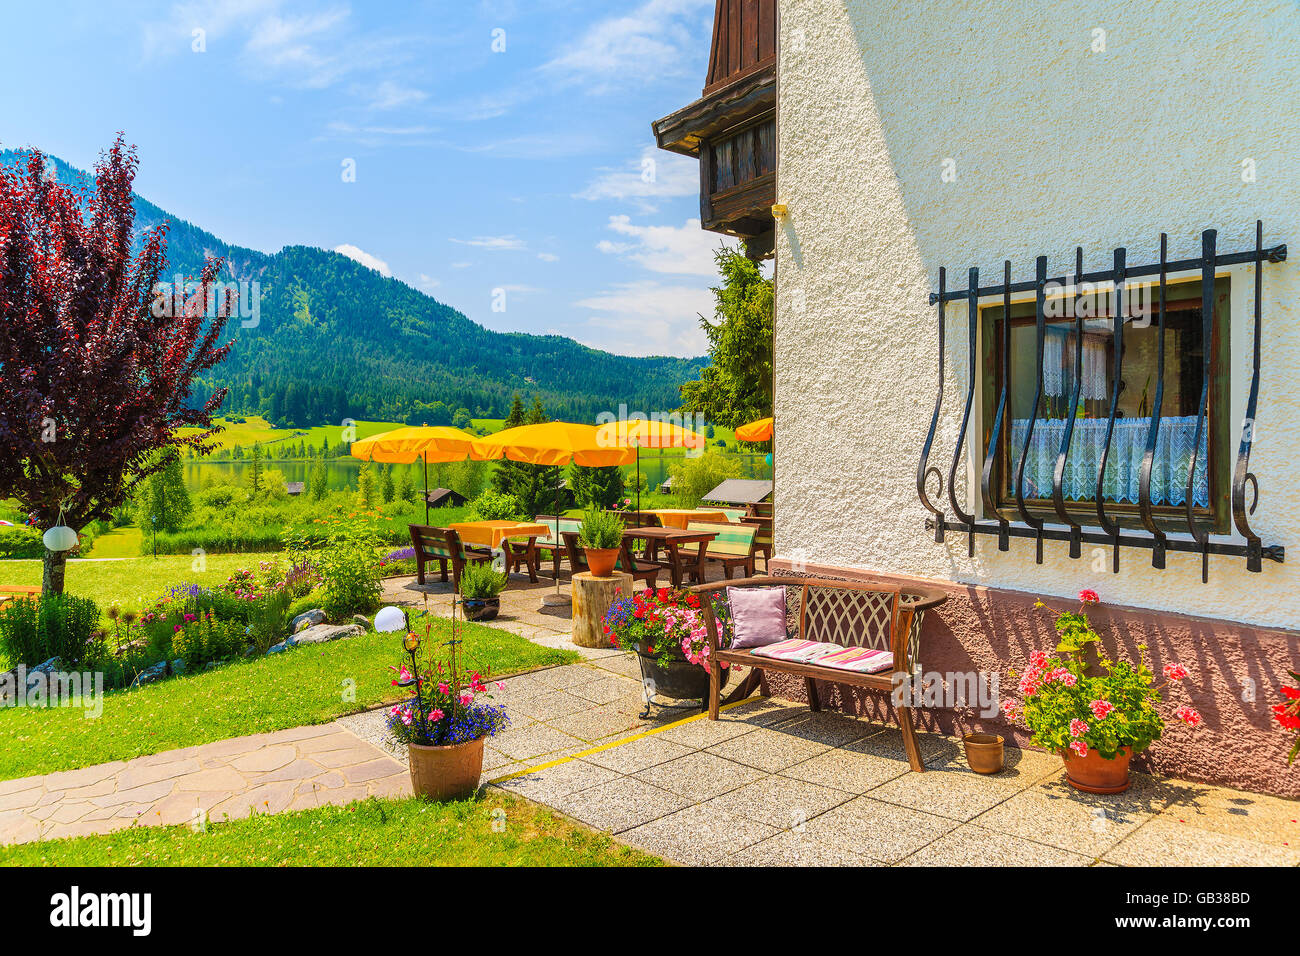 WEISSENSEE LAKE, AUSTRIA - JUL 6, 2015: Alpine house with restaurant garden on shore of Weissensee lake, Carinthia land, Austria Stock Photo